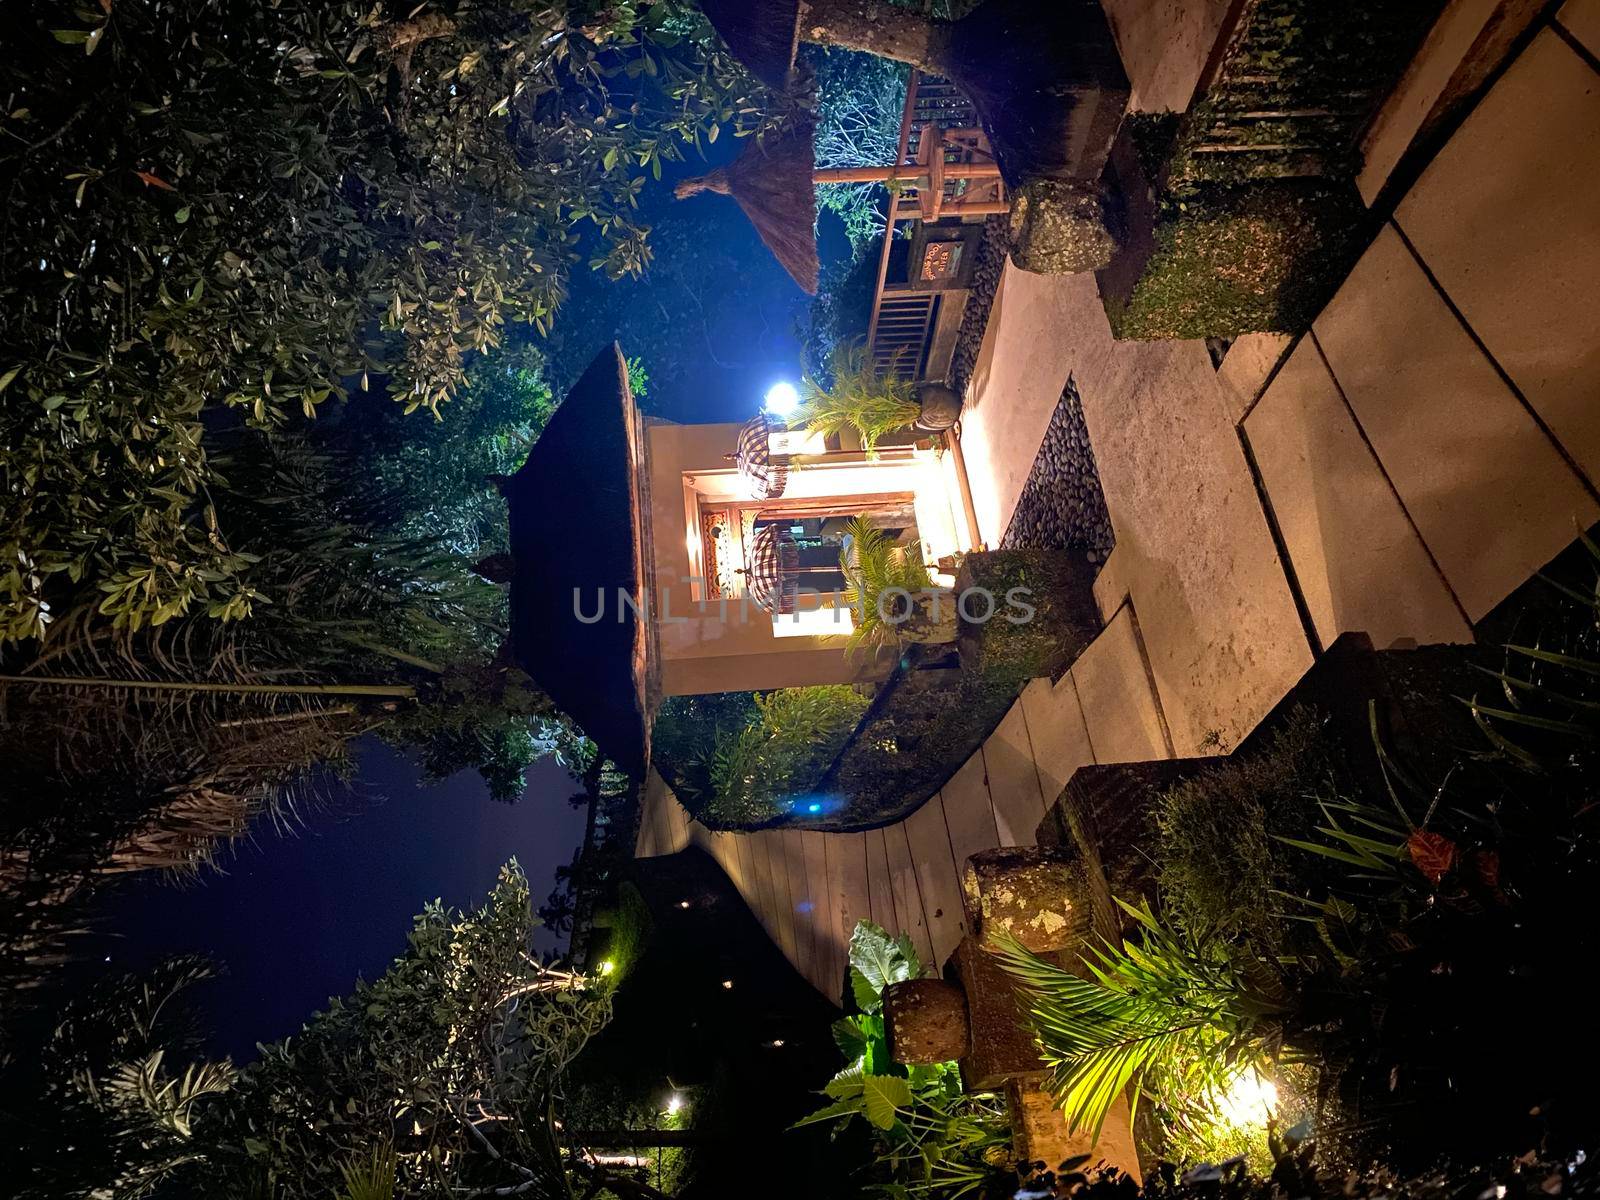 Luxury Villa at night time Ubud Bali Indonesia- stock photo by kaliaevaen